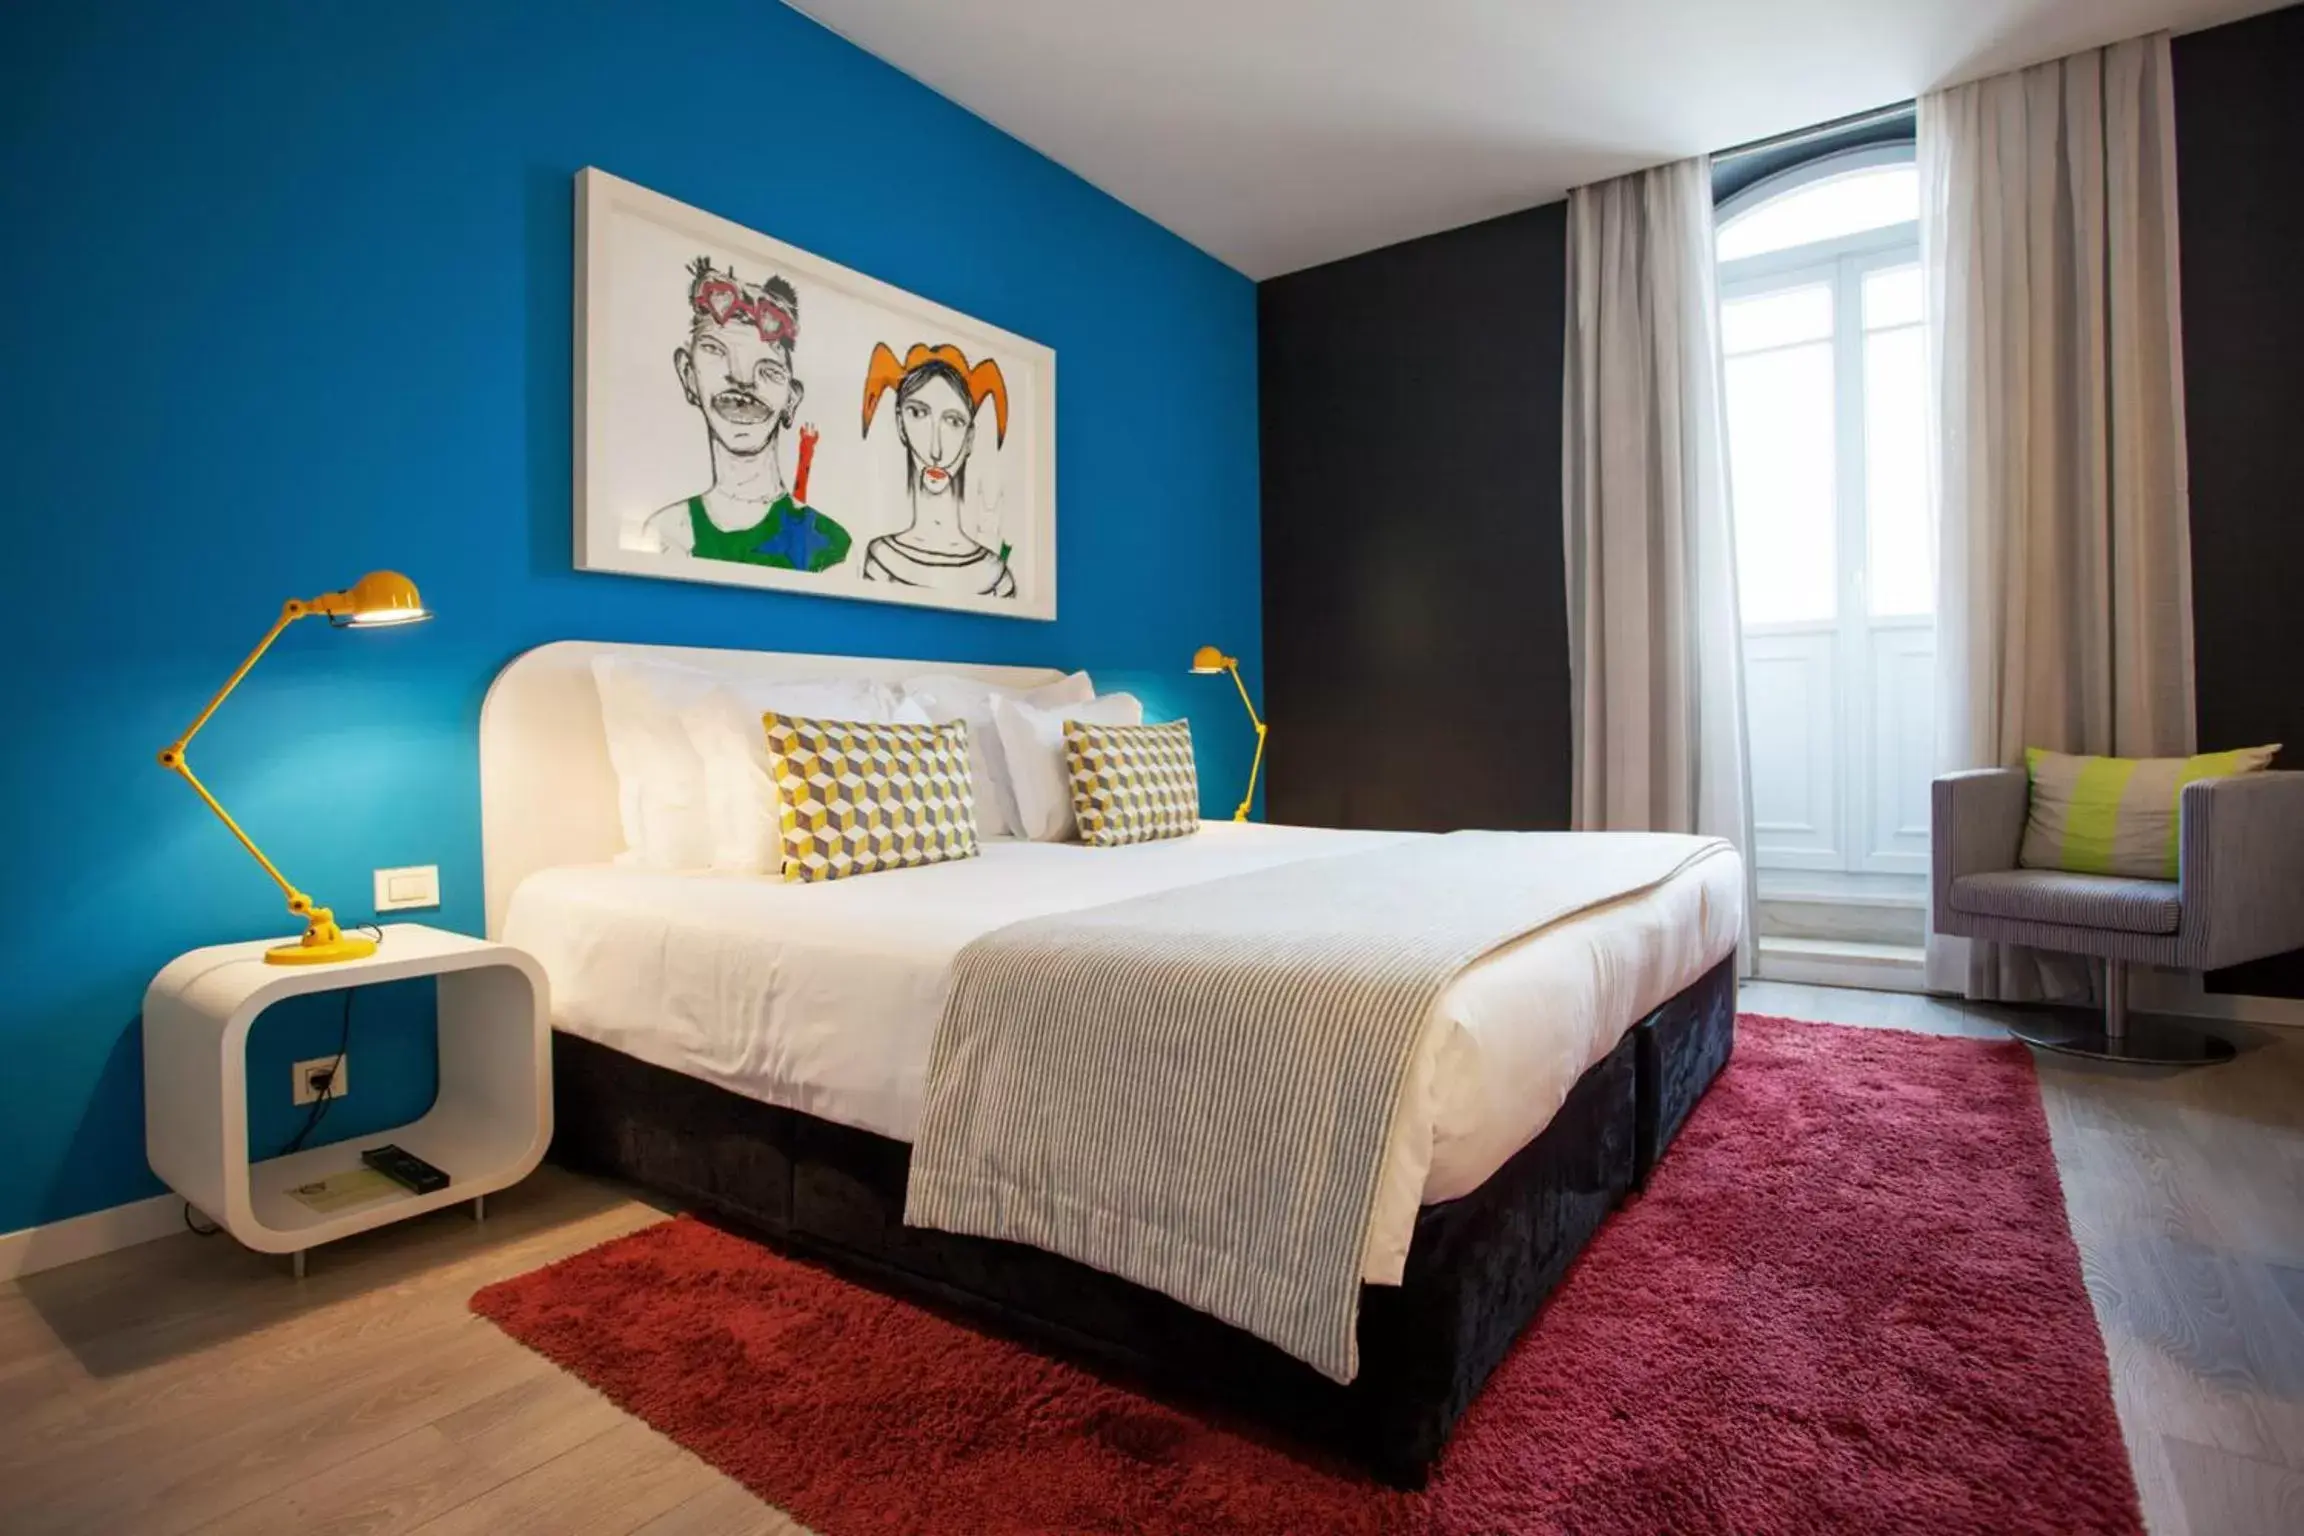 Bedroom, Room Photo in Internacional Design Hotel